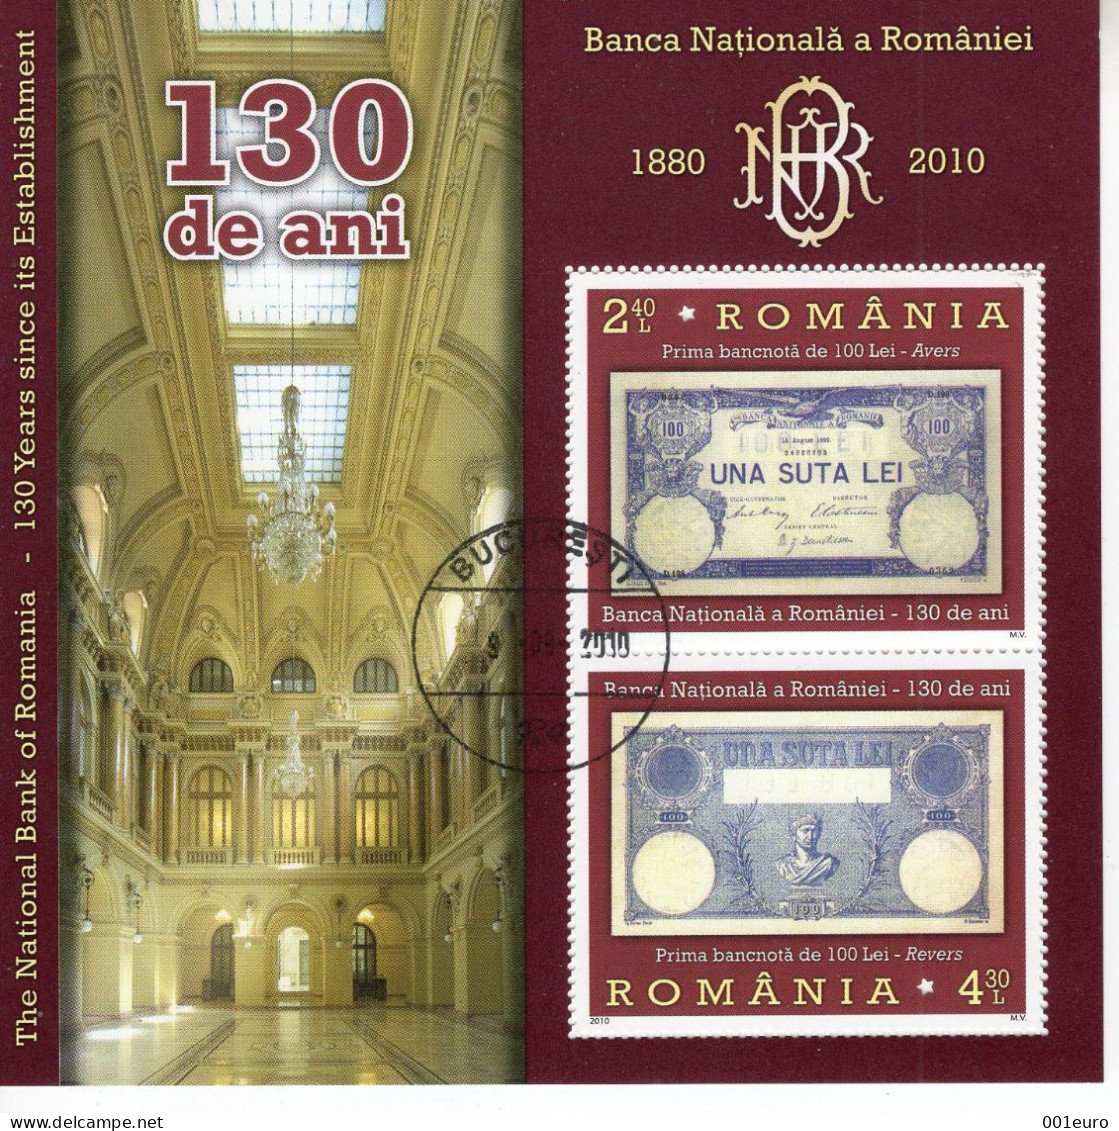 ROMANIA 2010 : ROMANIAN NATIONAL BANK130 YEARS - BANKNOTE, Used Souvenir Block - Registered Shipping! - Usado